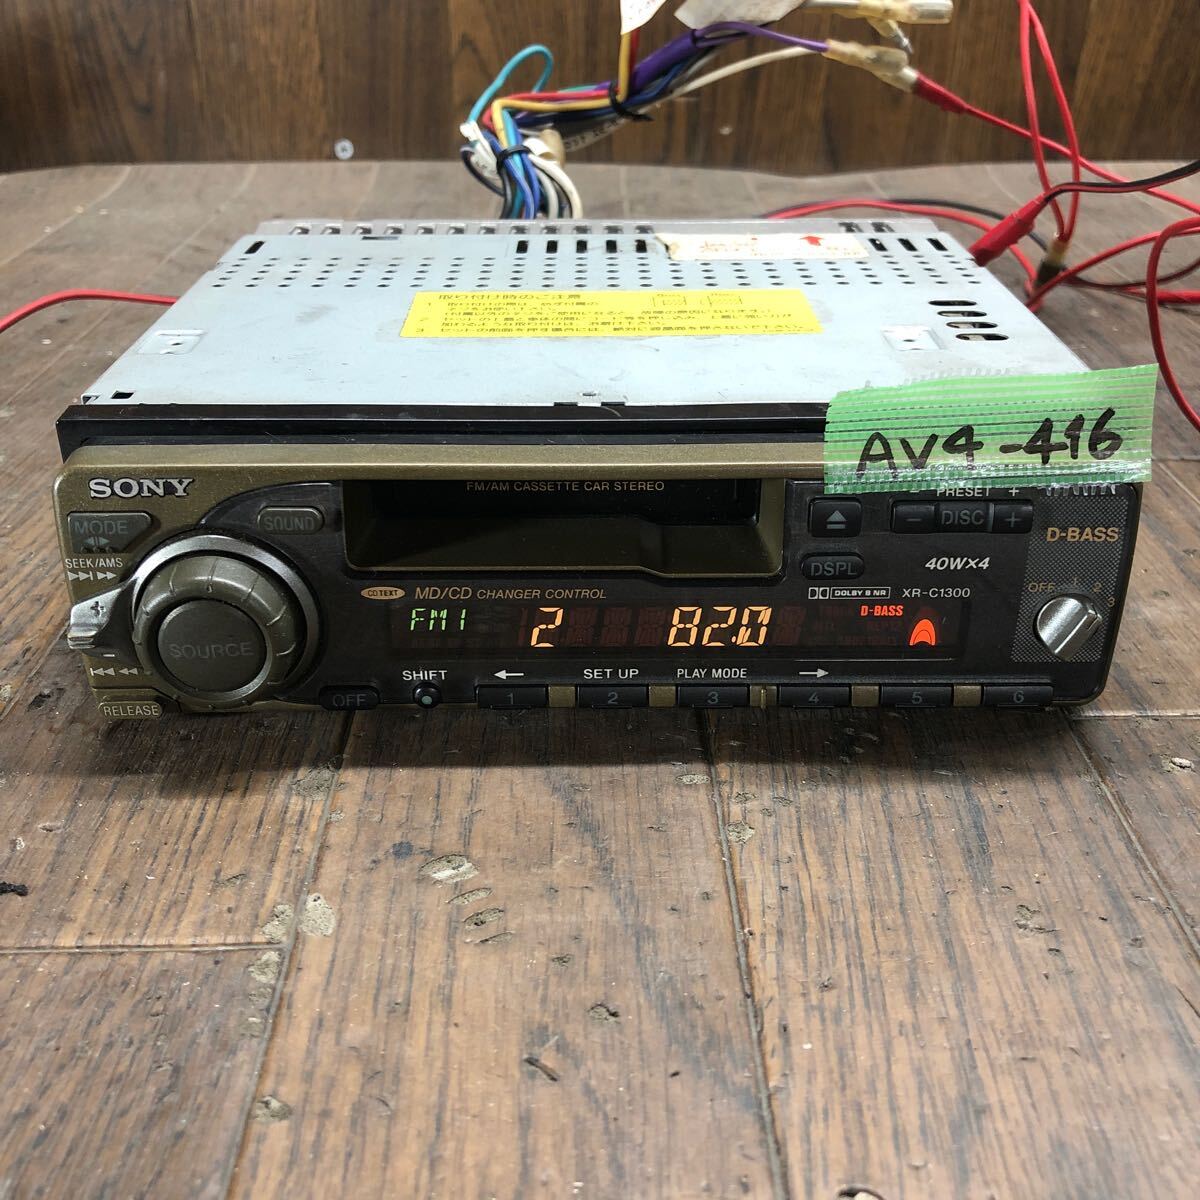 AV4-416 super-discount car stereo tape deck XR-C1300J 1520719 cassette FM/AM body only simple operation verification ending used present condition goods 